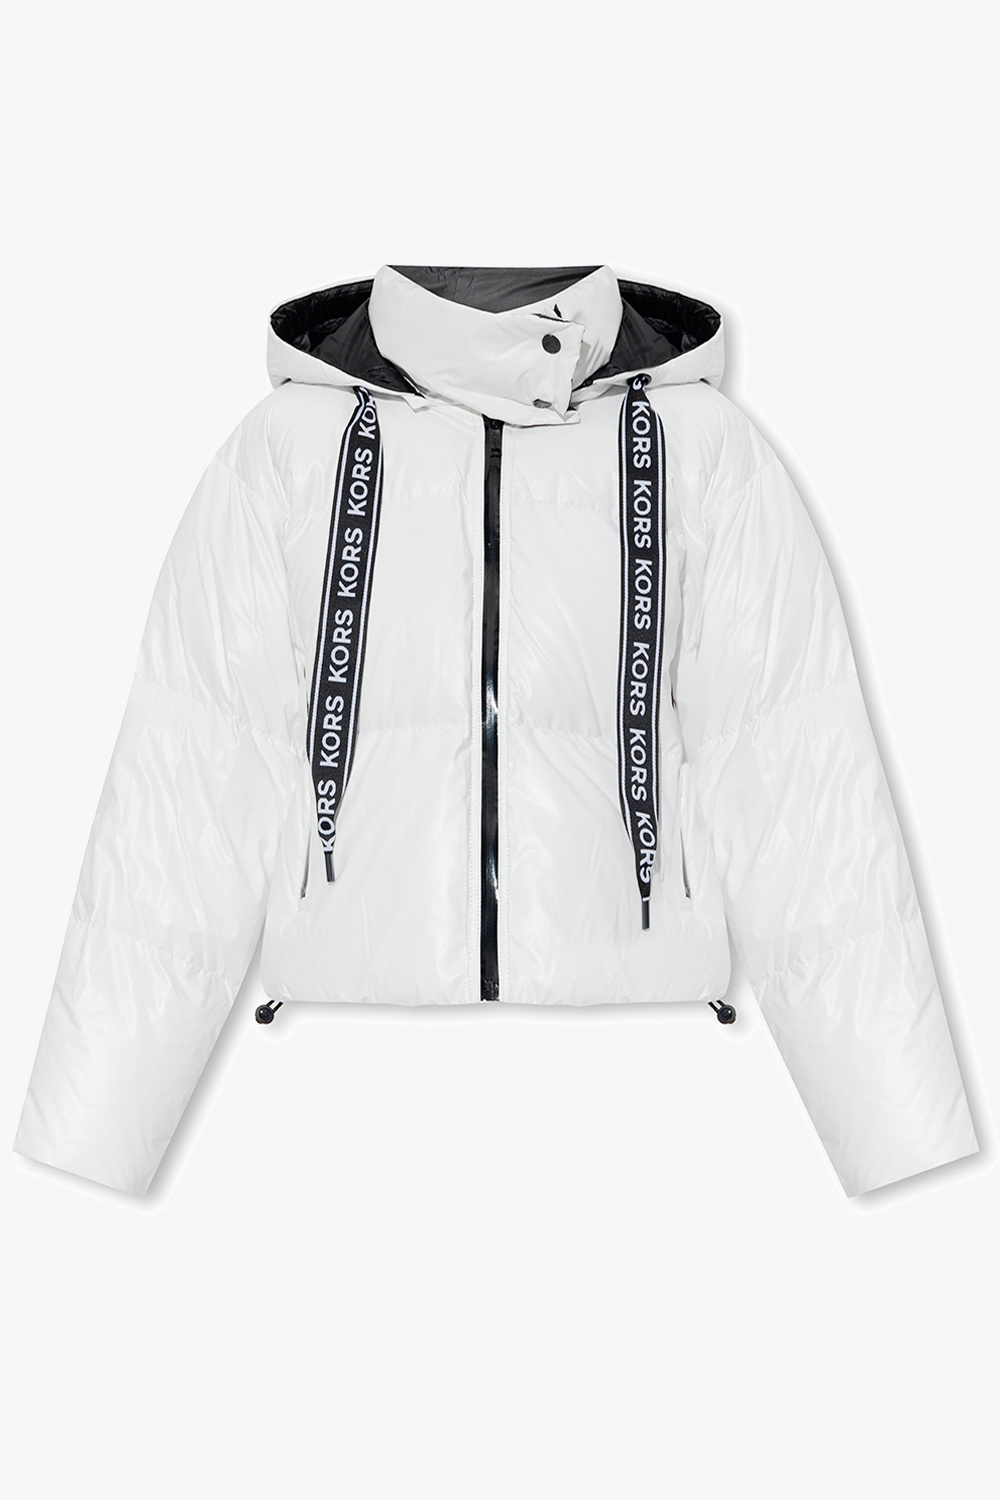 StclaircomoShops | Women's Clothing | Michael Michael Kors Down jacket with  logo | travis scott x playstation motherboard logo t shirt item